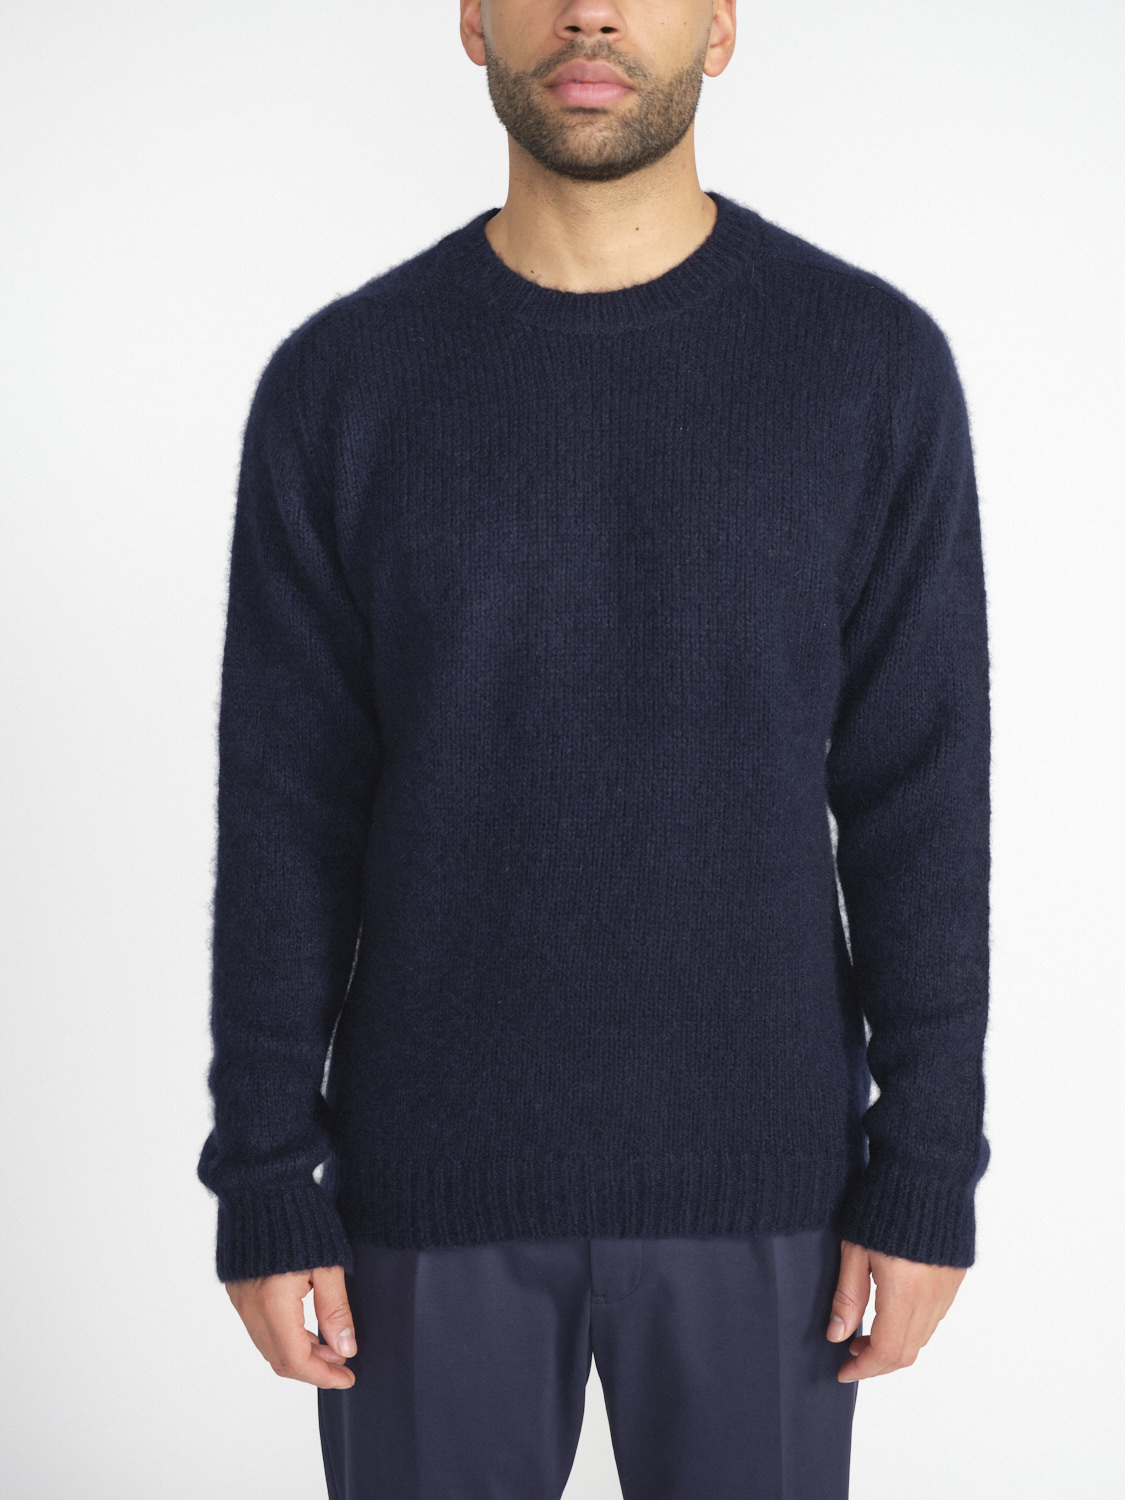 Stephan Boya Boya Leo – Soft cashmere sweater  marine M